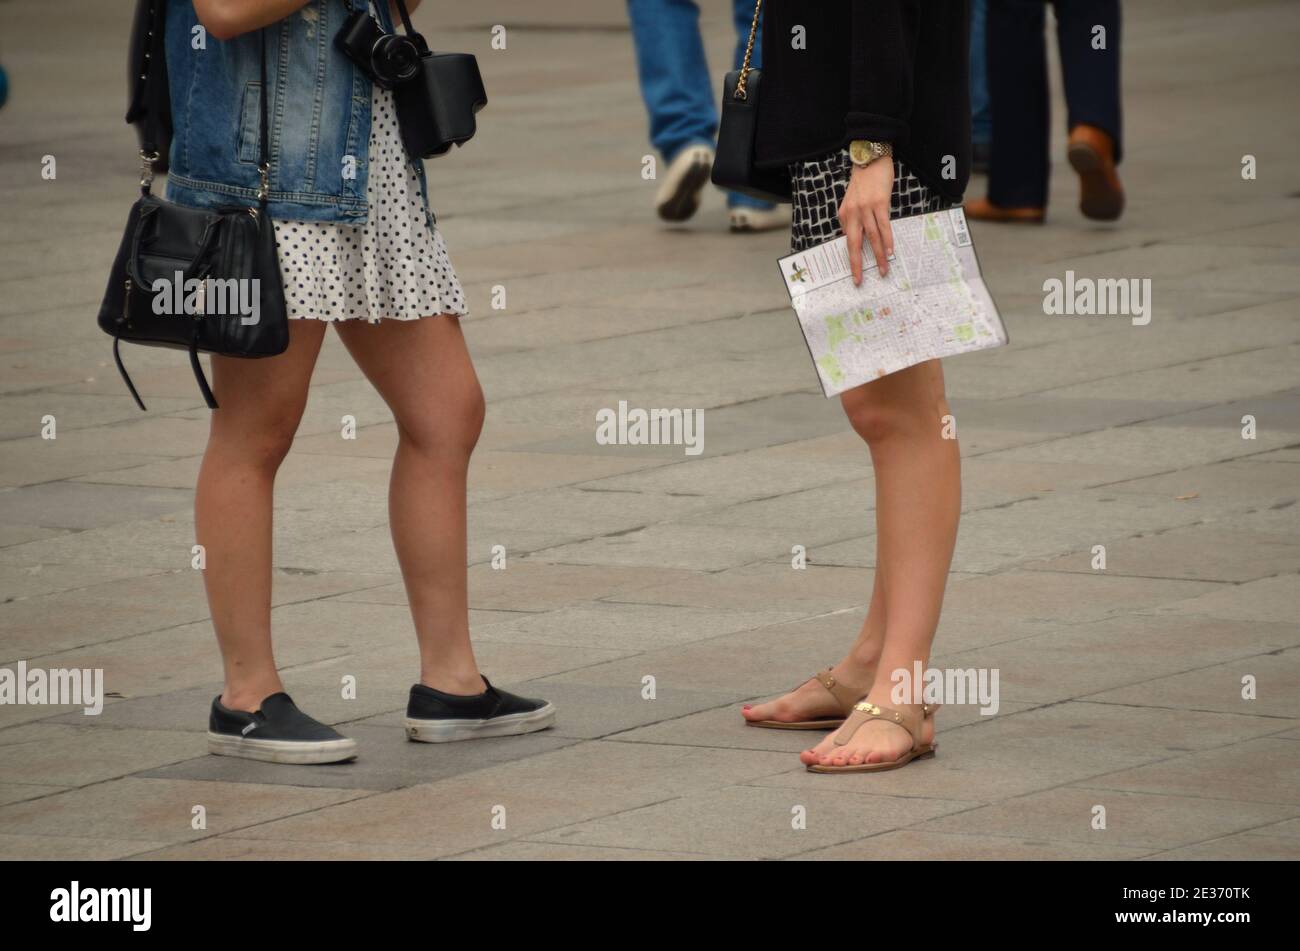 Junge Frauen in kurzen Minirock in der Stadt Stockfotografie - Alamy